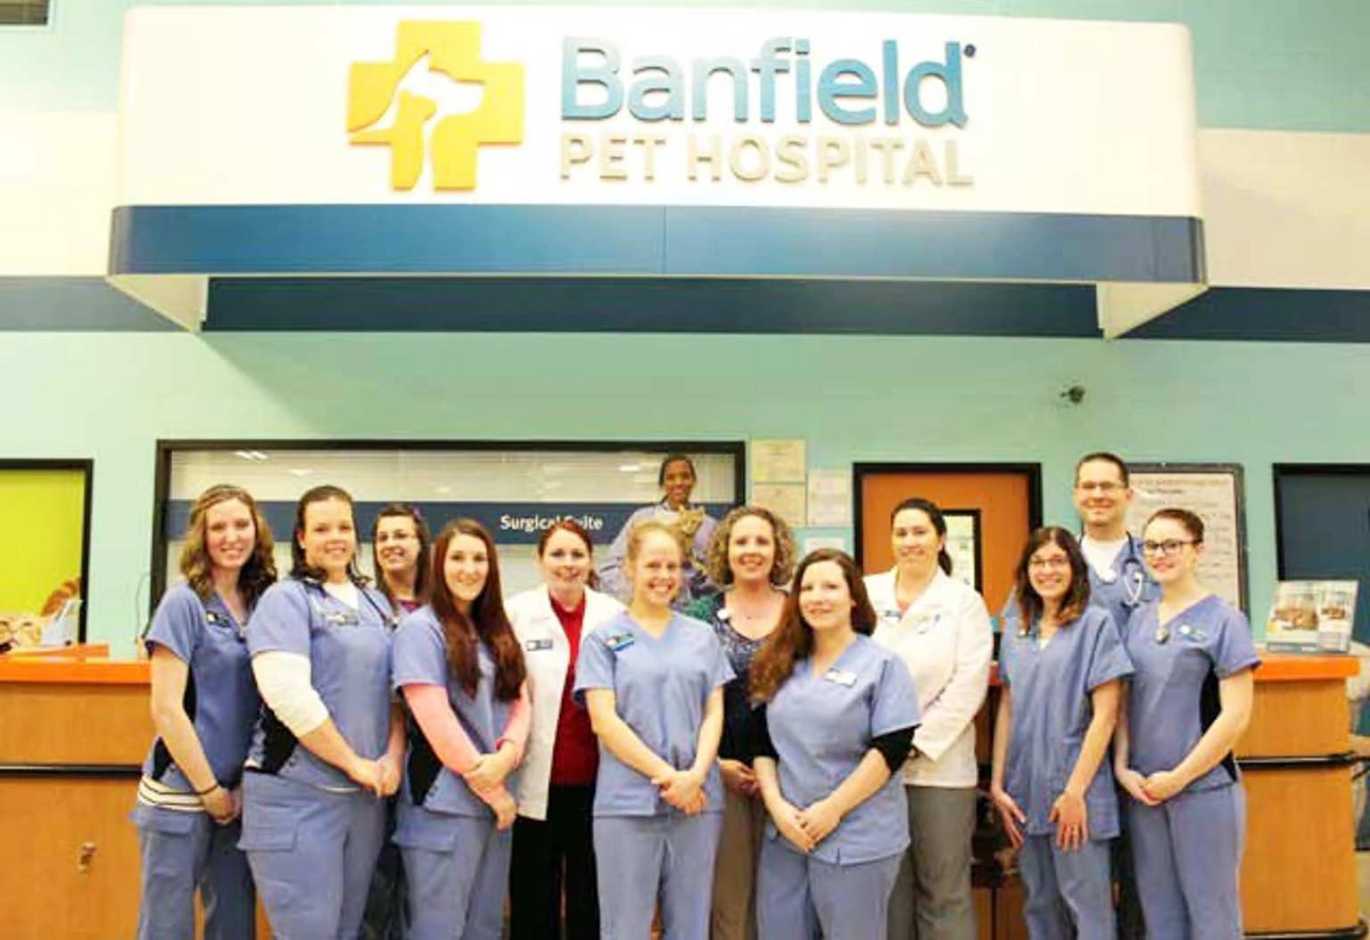 A group of Banfield Associates at the Banfield Pet Hospital, Alcoa, TN